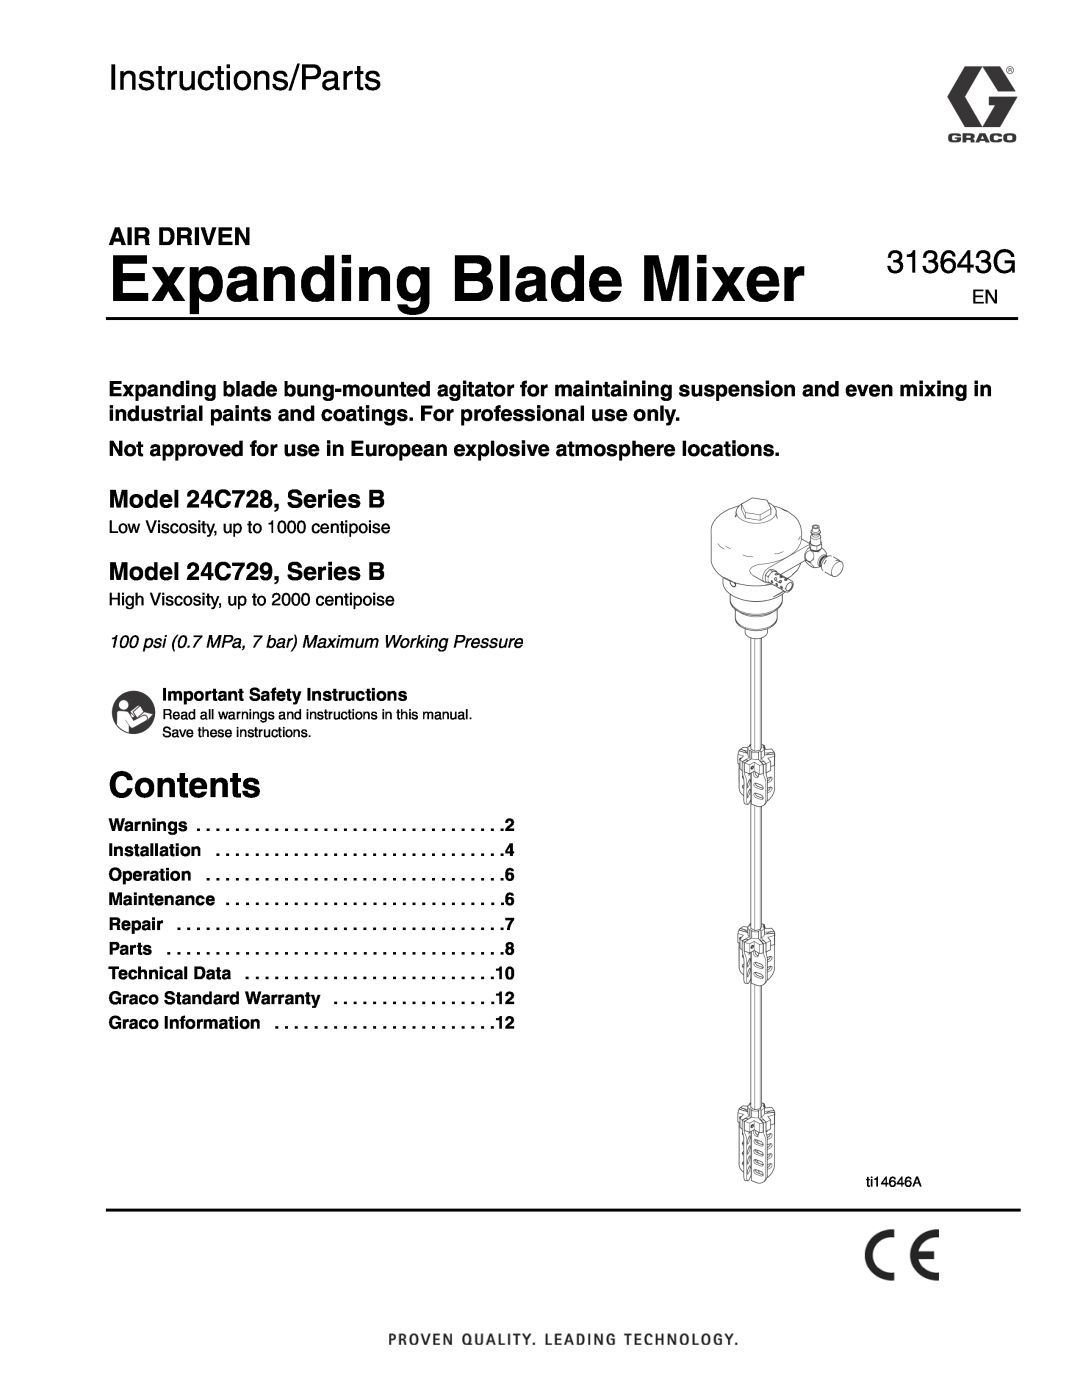 Graco 24C729 warranty Contents, Expanding Blade Mixer, Instructions/Parts, 313643G, Air Driven, Model 24C728, Series B 